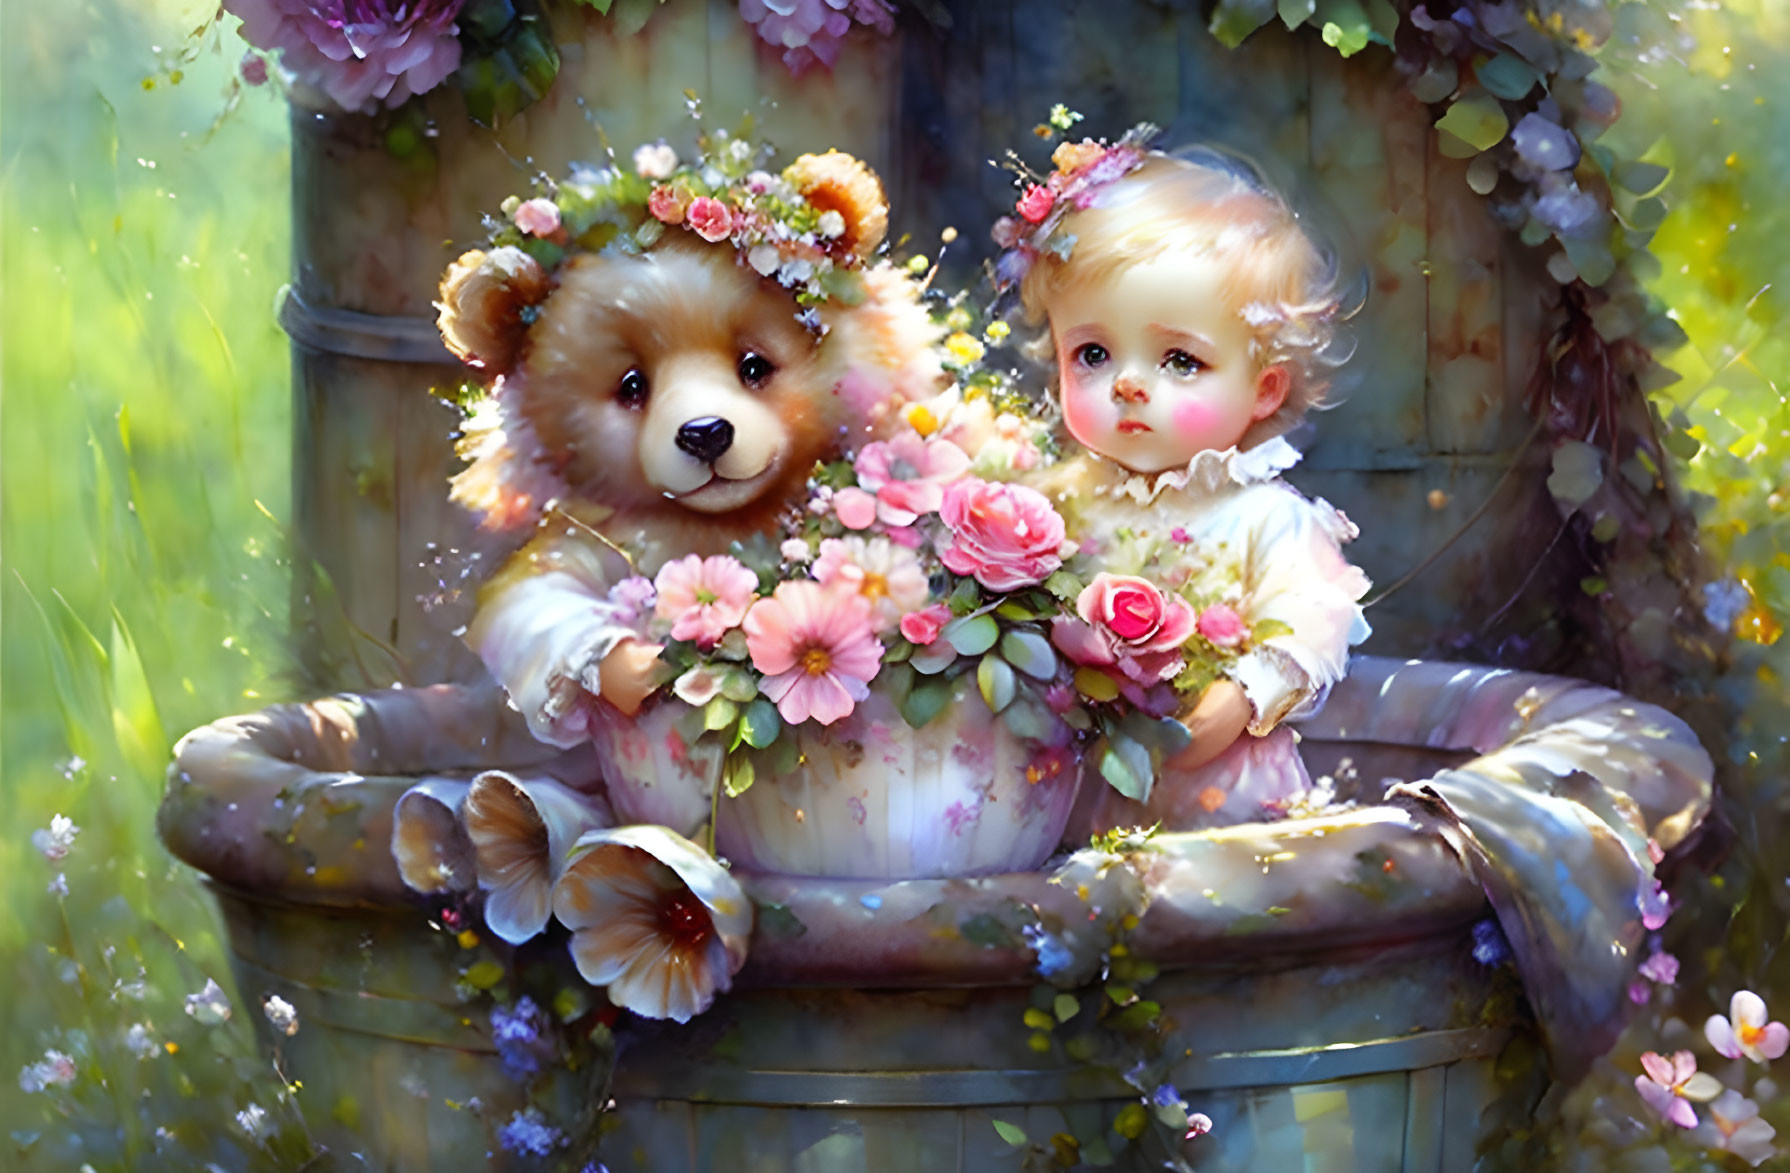 Little Girl With Her Teddy Bear